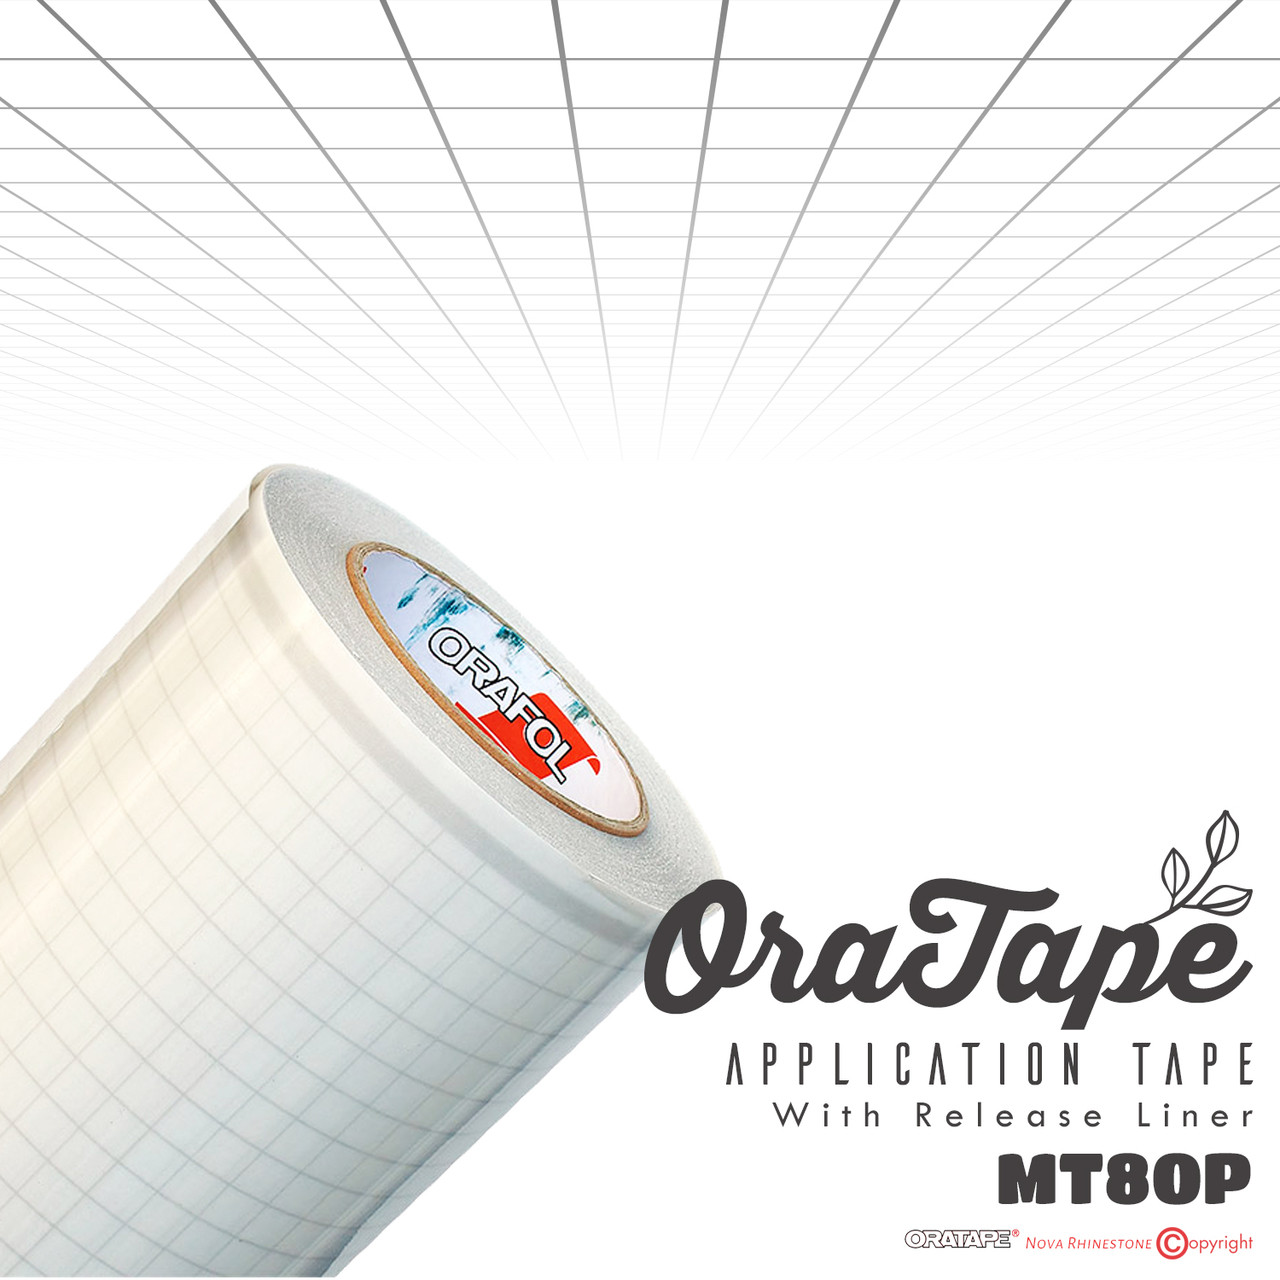 Oracal Oratape Transfer Tape Rolls for Adhesive Vinyl